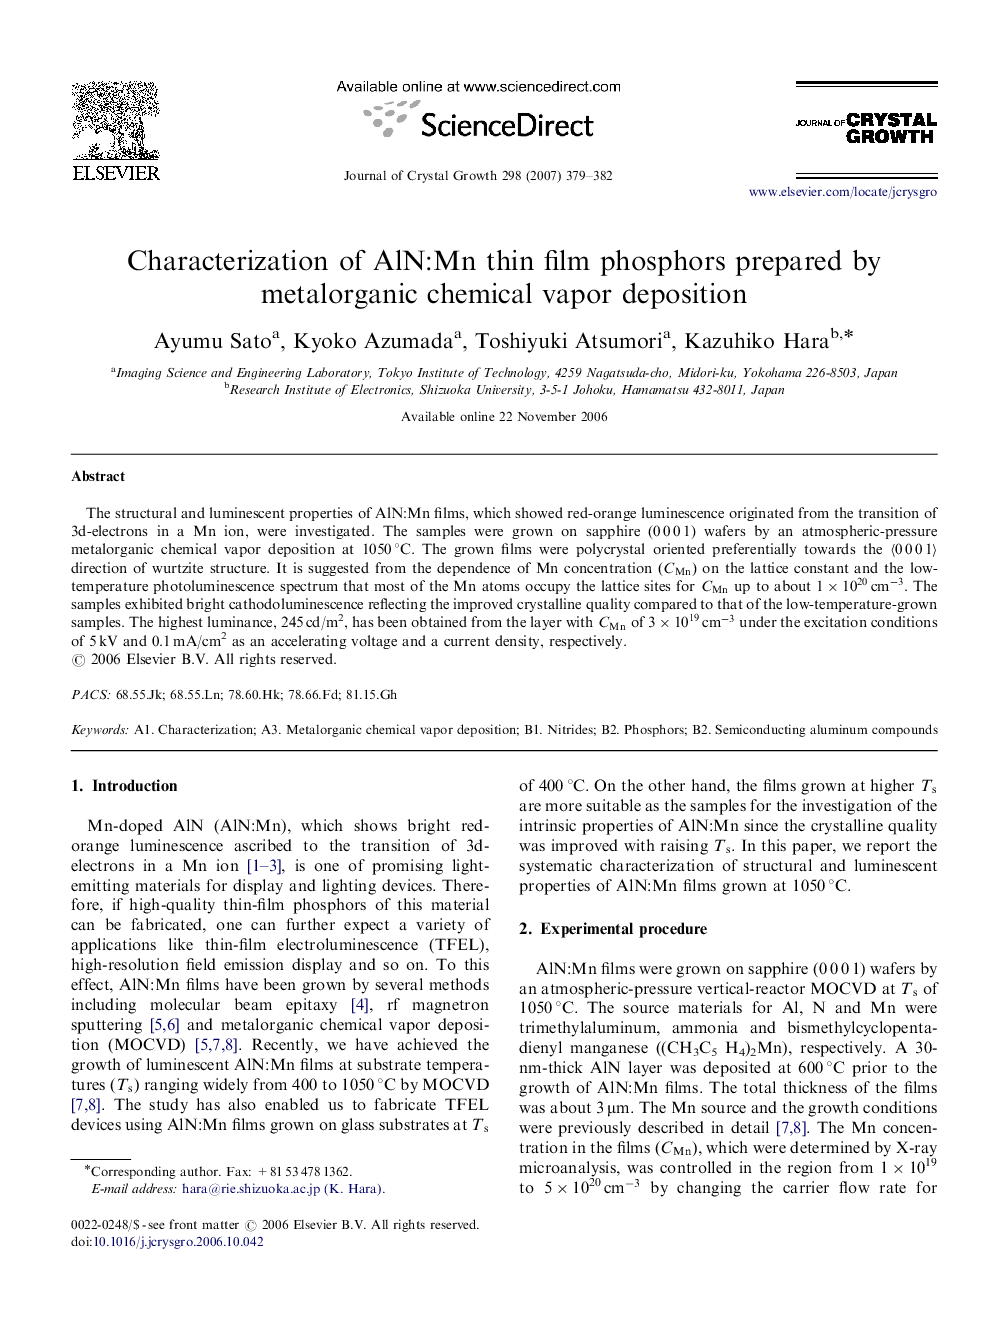 Characterization of AlN:Mn thin film phosphors prepared by metalorganic chemical vapor deposition